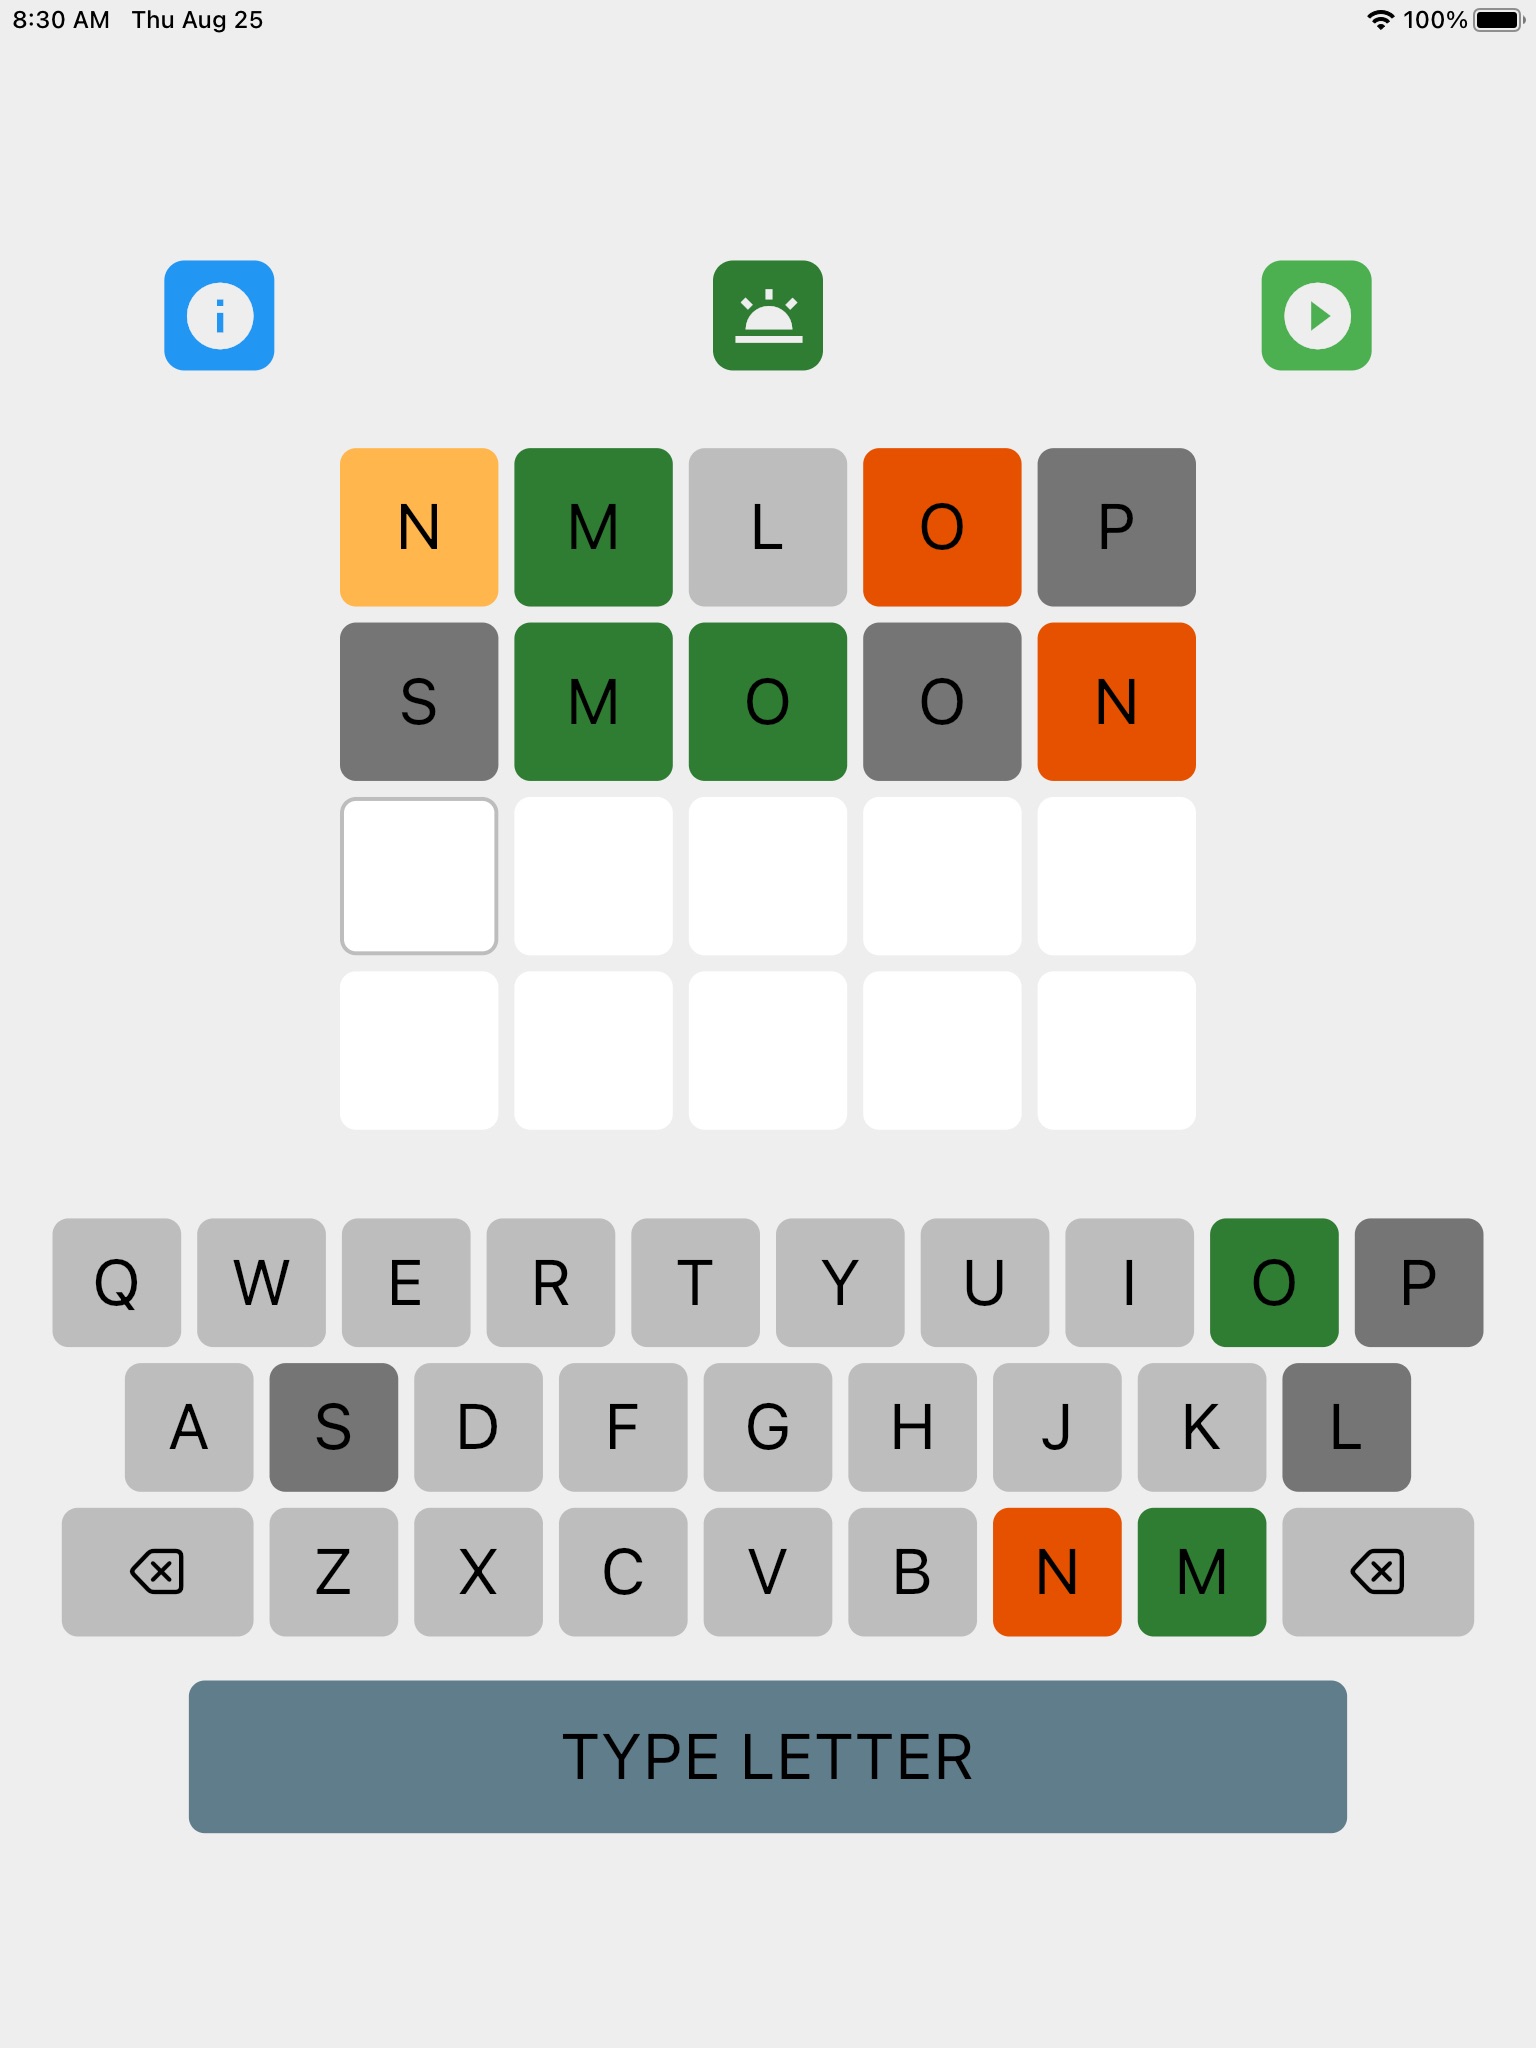 Wordgic - Find Word in 4 Tries screenshot 2